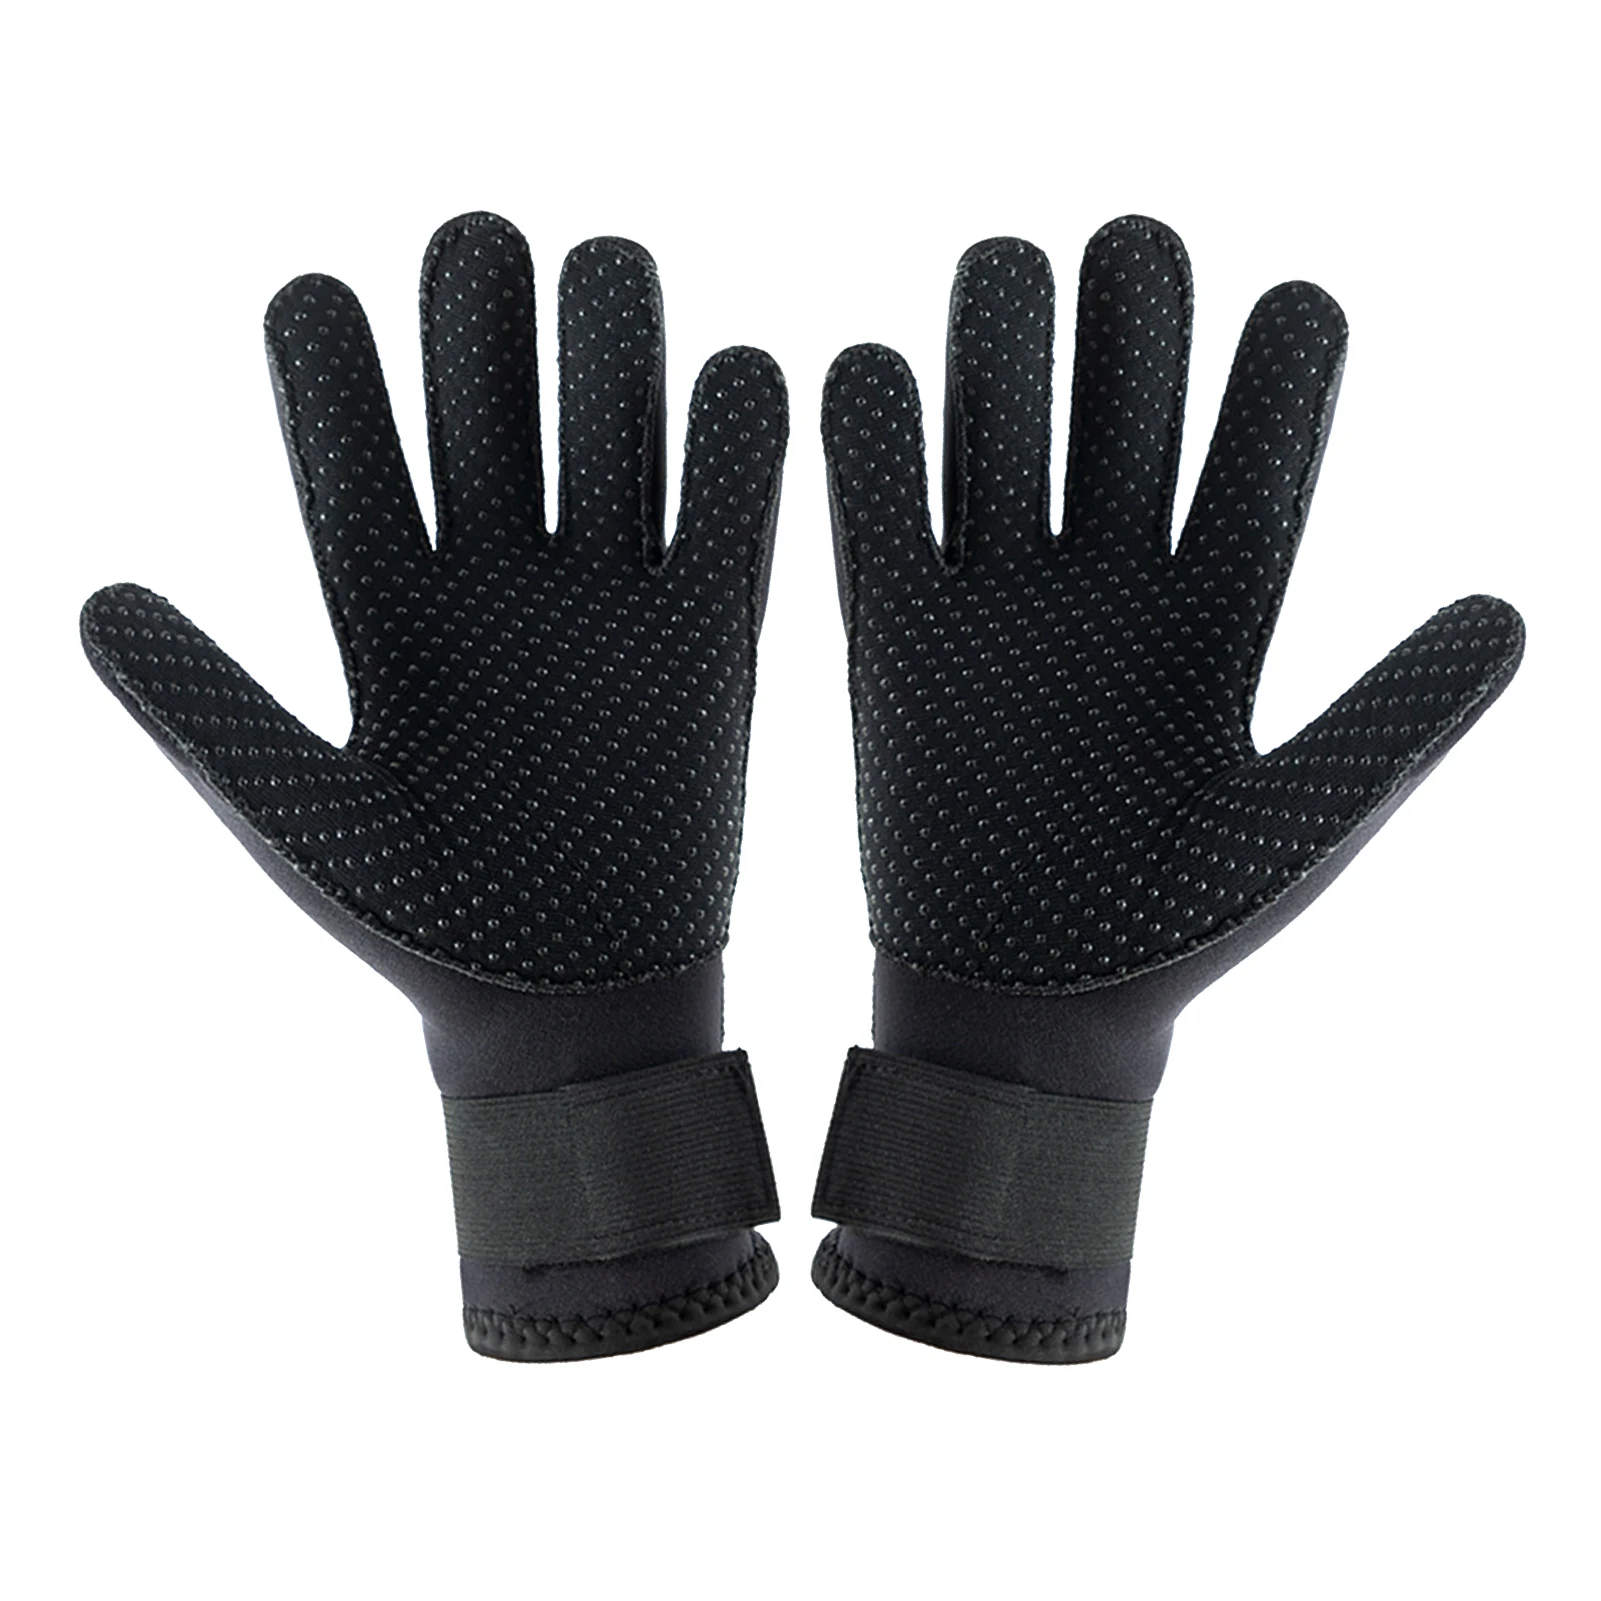 

1pair For Men Women Neoprene Anti Scratch Winter Skid Resistance Wear-resisting Keep Warm Outdoor Sports Snorkeling Diving Glove